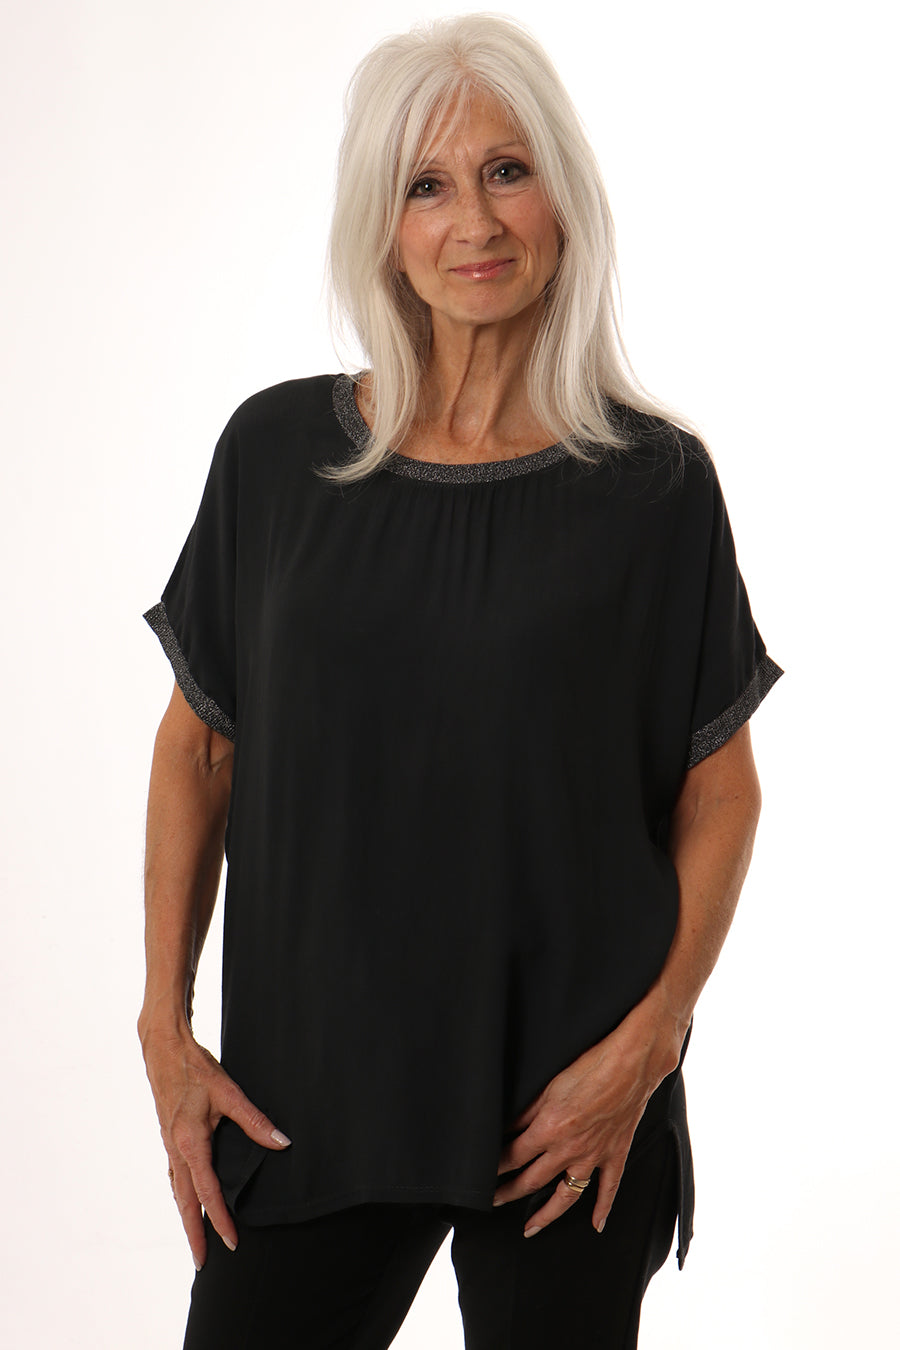 Model wearing dark grey short sleeve top with metallic trim on neck and sleeves